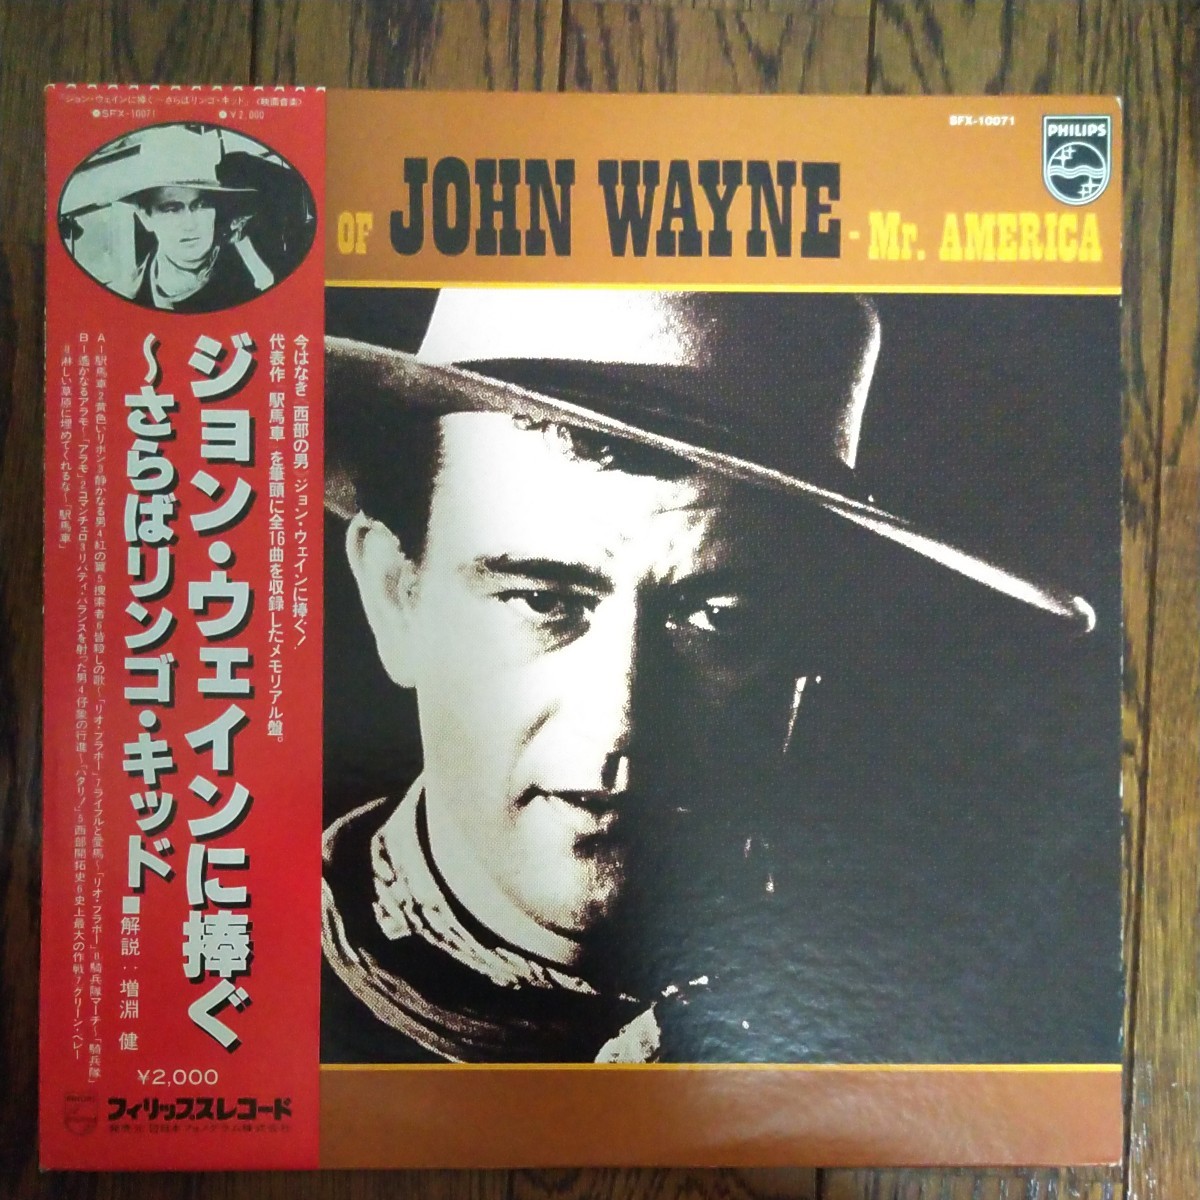 LP запись с лентой John way n...... яблоко Kid больше .. запад часть. мужчина вестерн kau Boy станция лошадь машина American american JOHN WAYNE